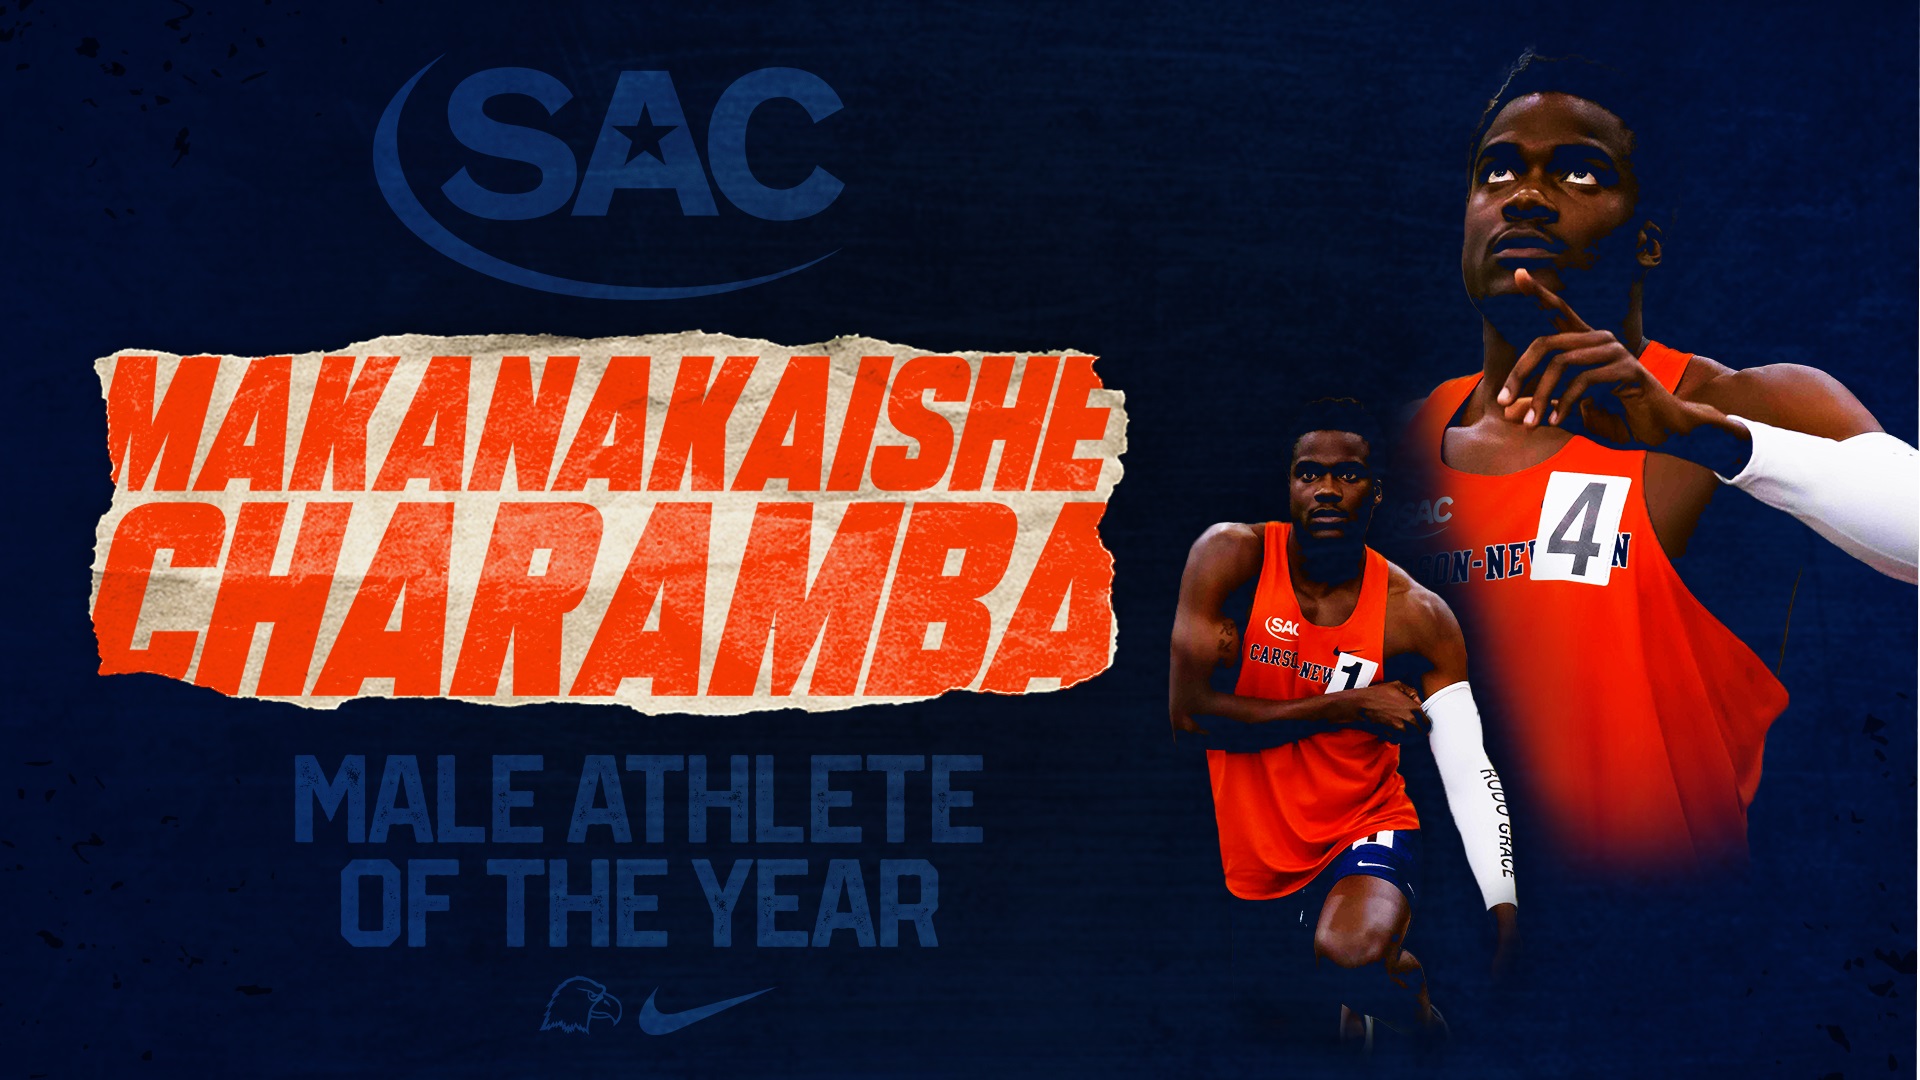 Charamba earns SAC Male Athlete of the Year